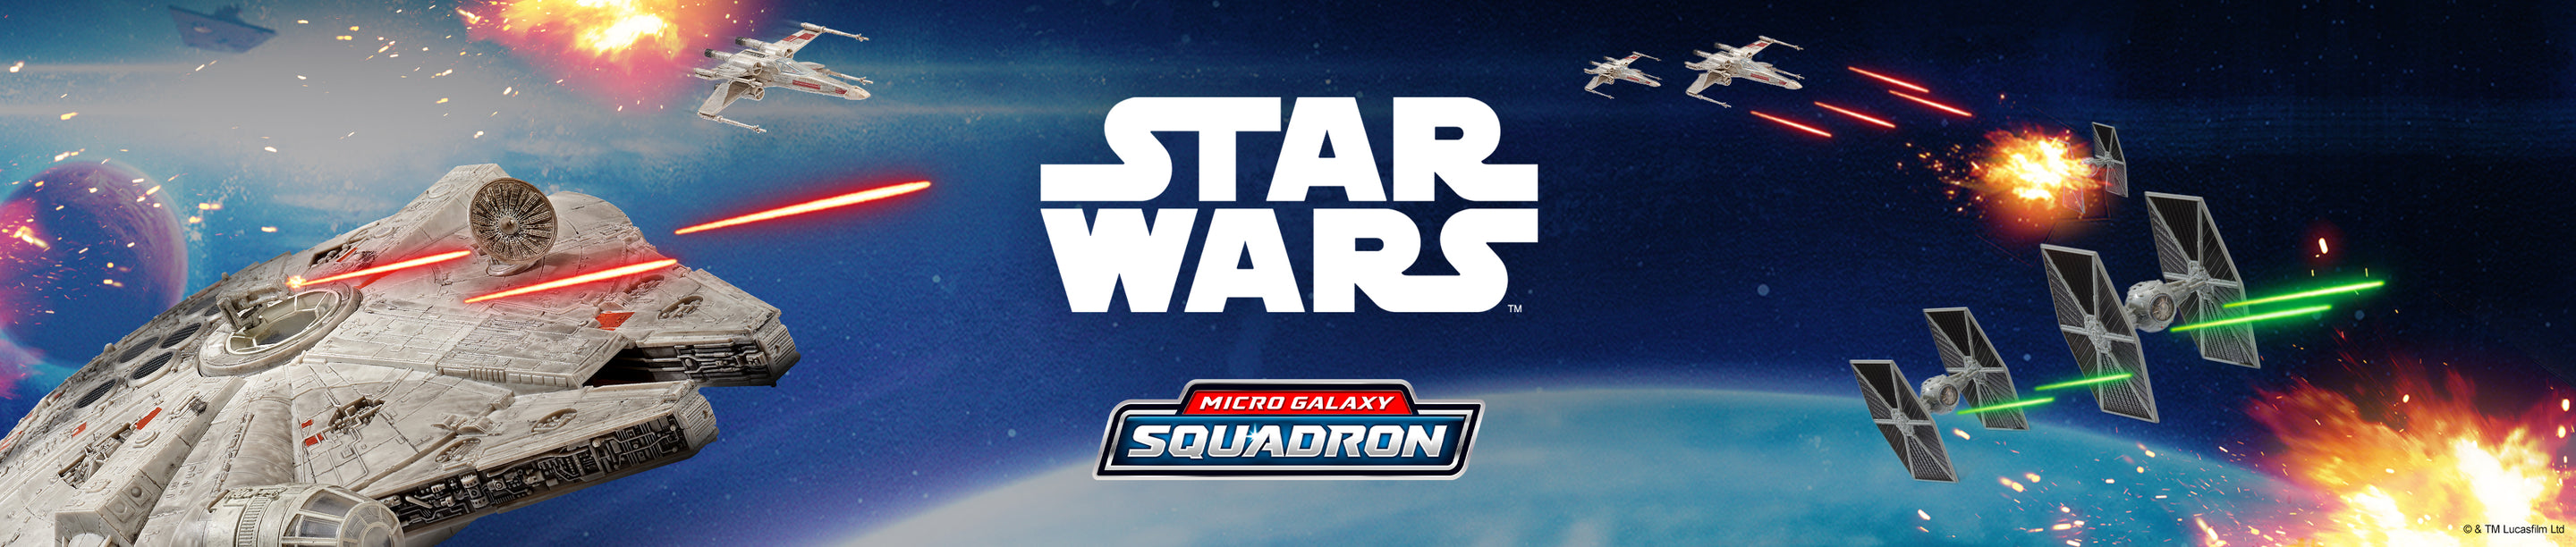 Star Wars Micro Galaxy Squadron - hero image